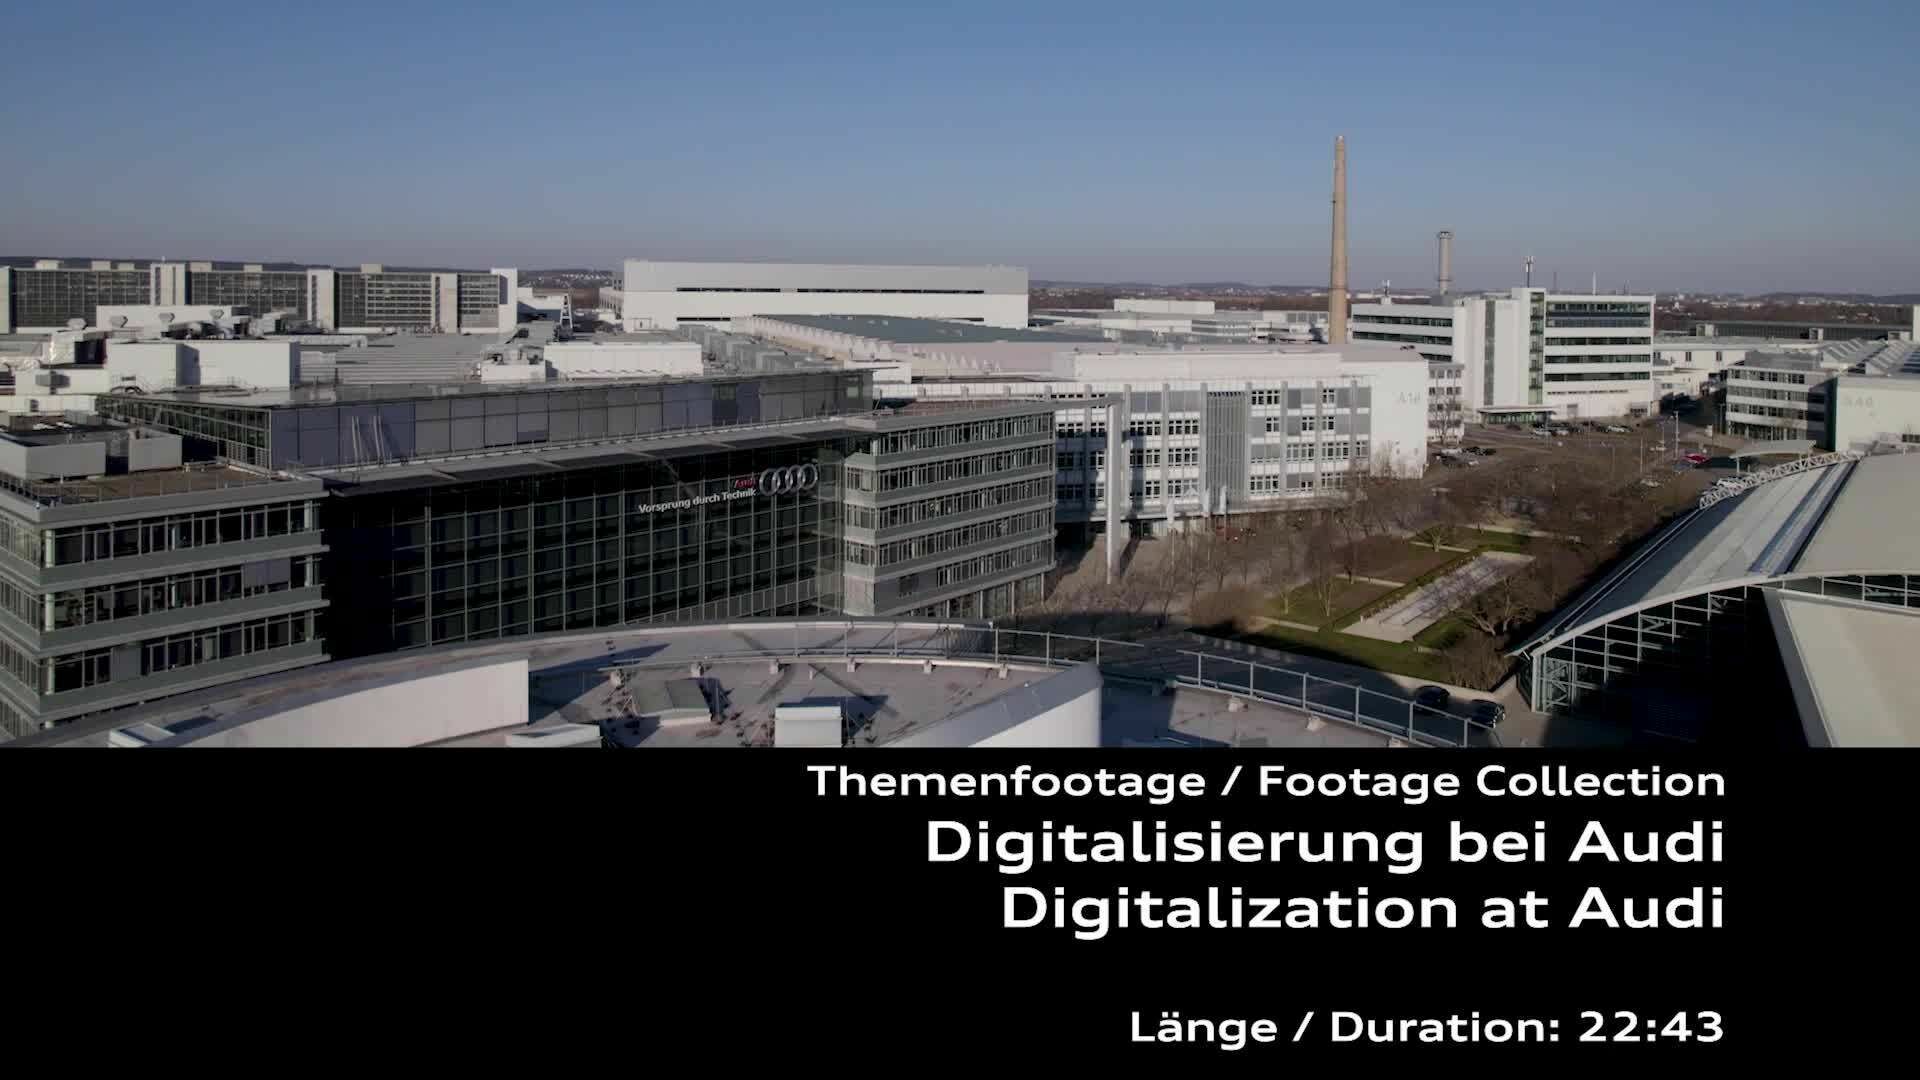 Footage: Digitalization at Audi